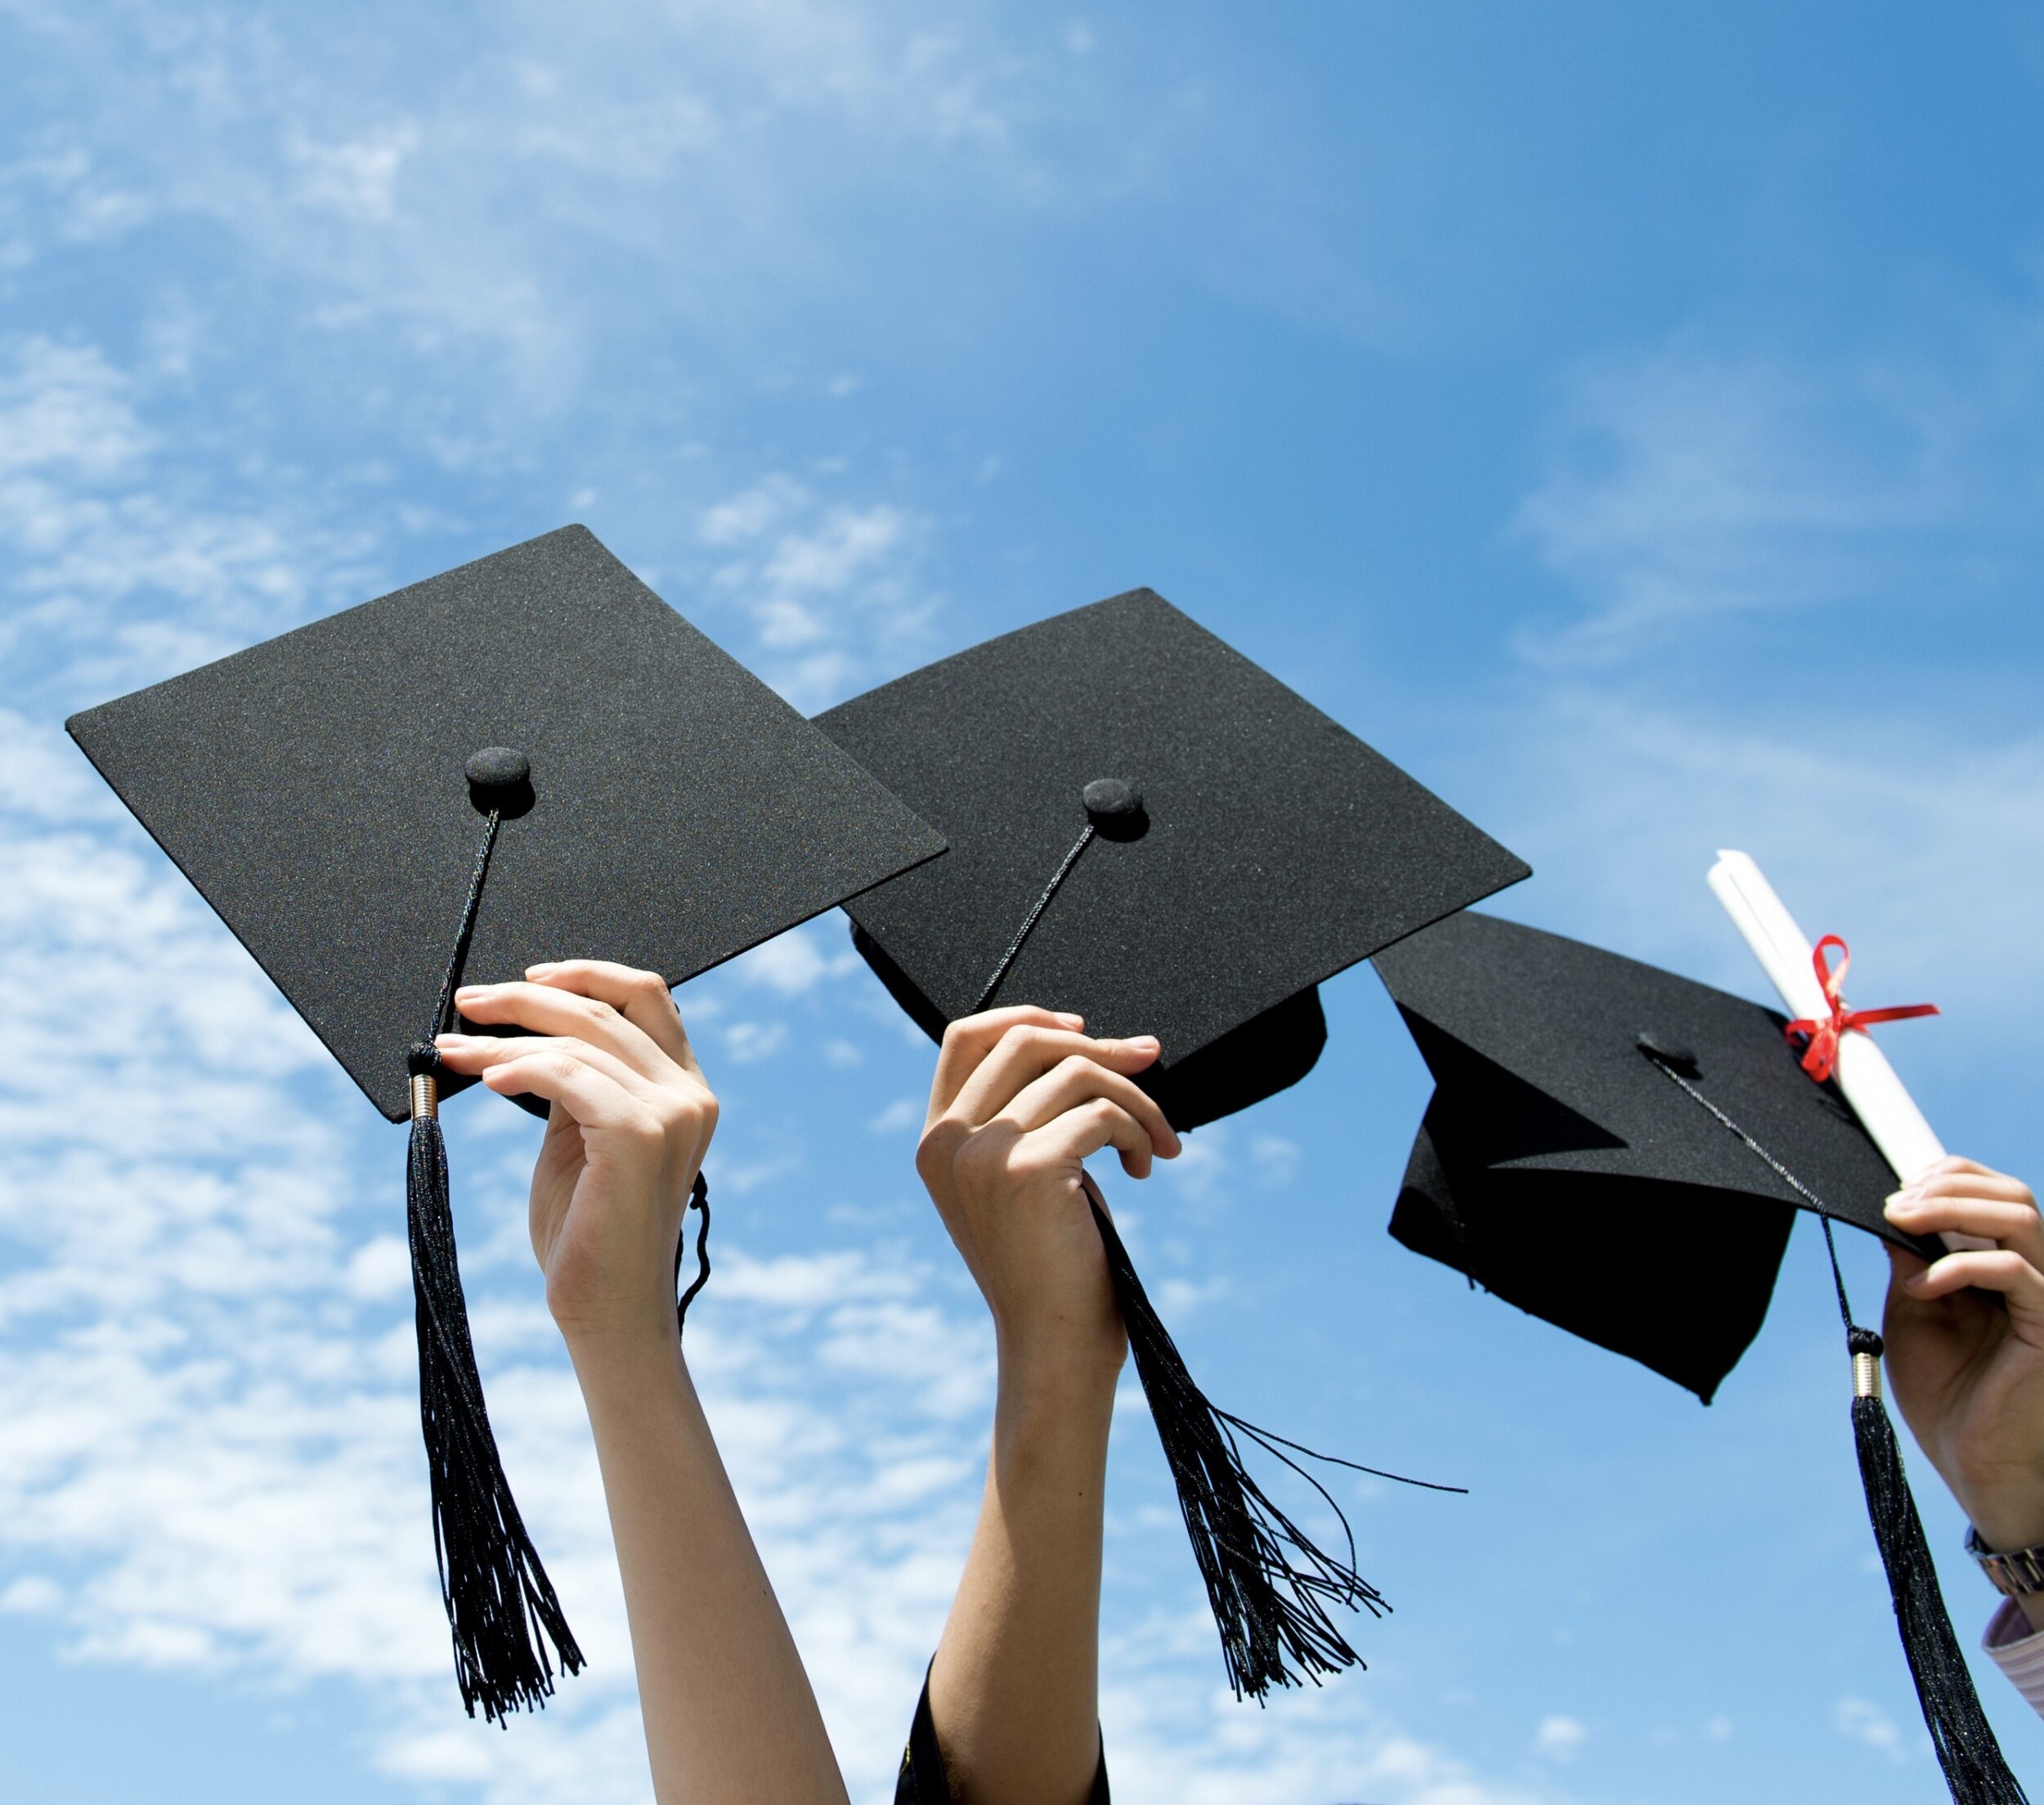 25 Graduation Cap Ideas for 2018 - How to Decorate Your Graduation Hat